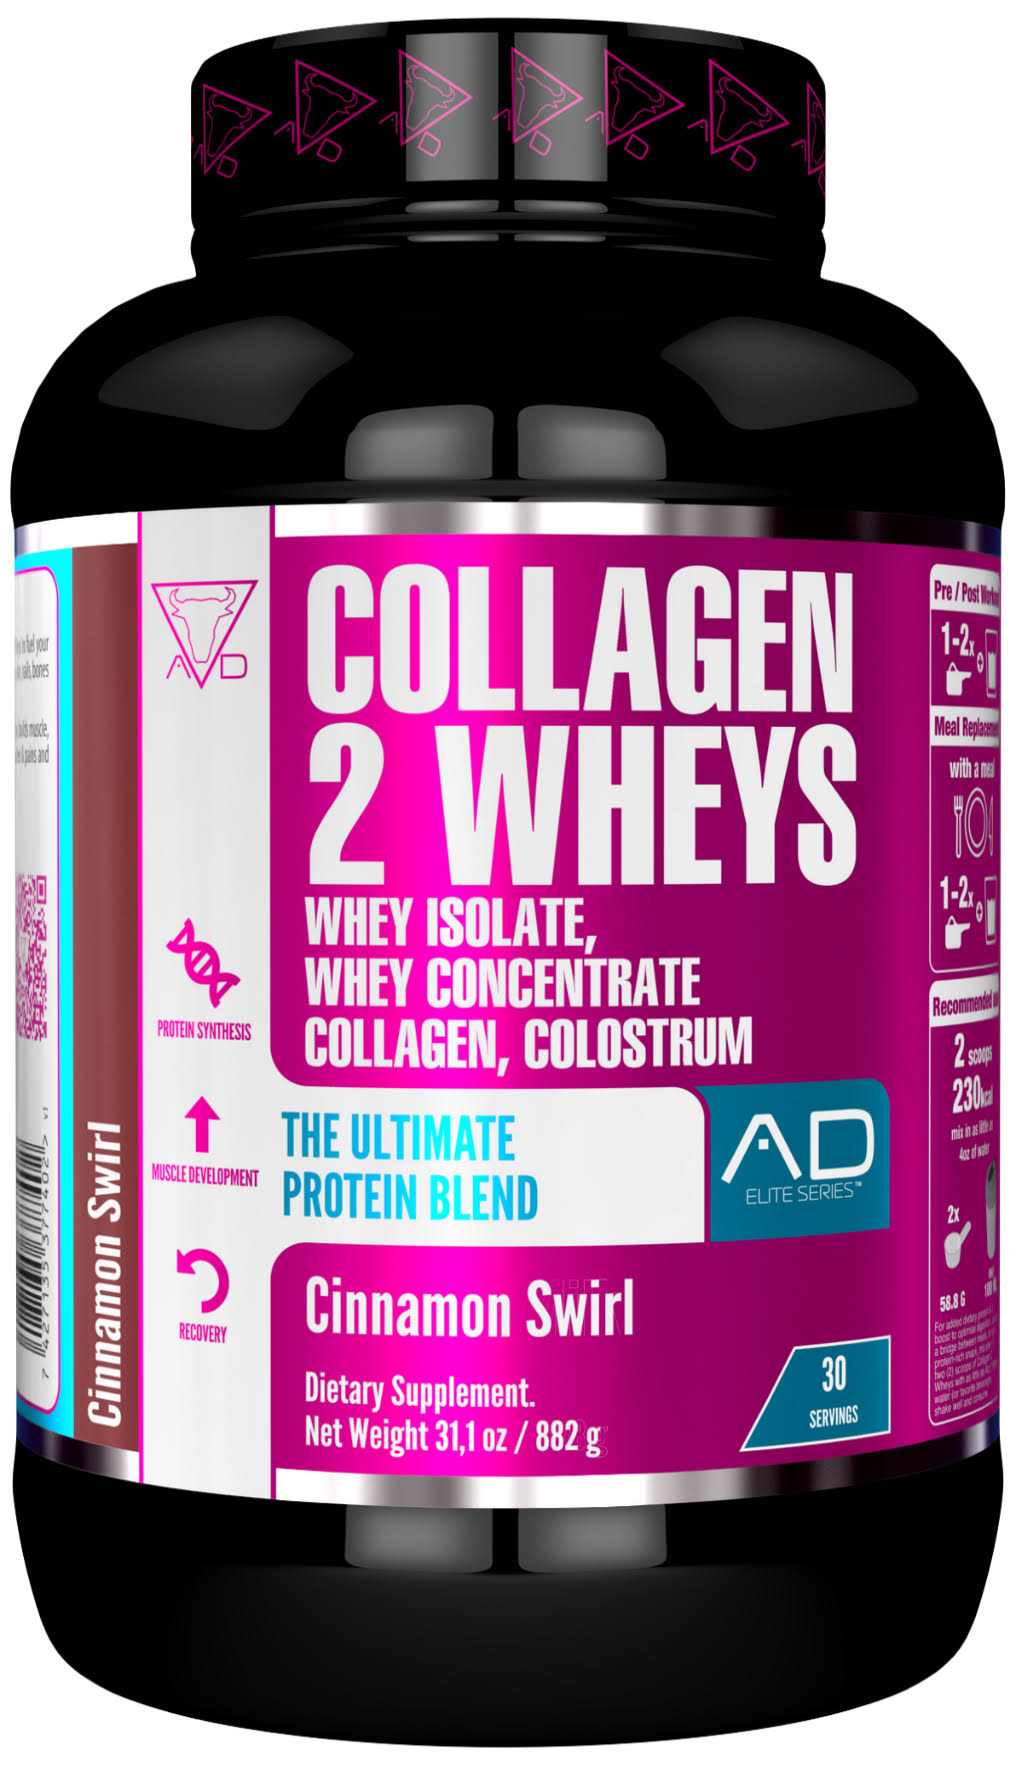 Project Ad Collagen 2 Wheys Cinnamon Swirl - 30 Servings